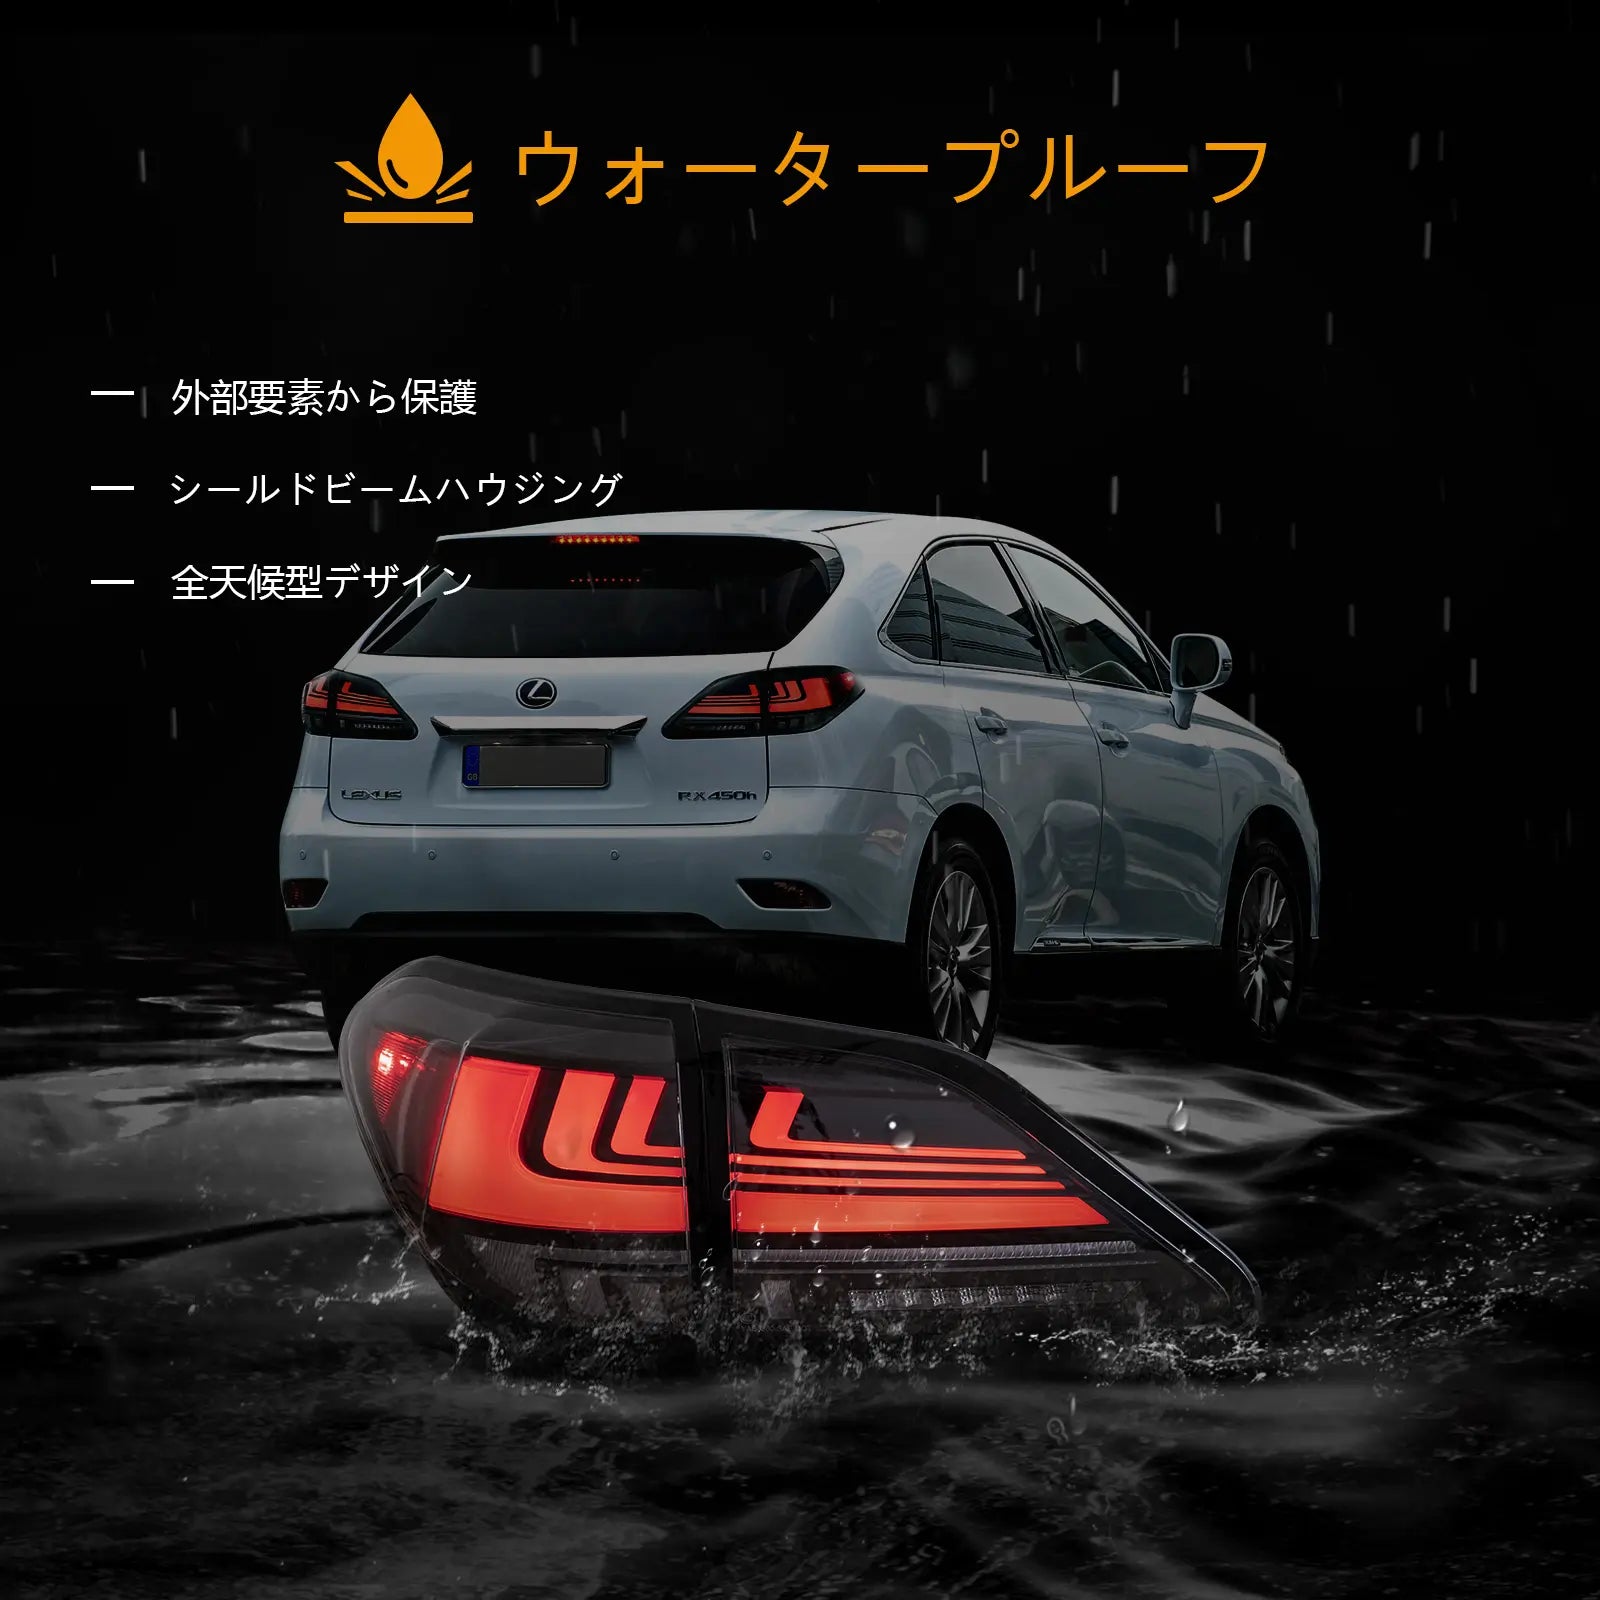 09-14 Lexus RX Series 3th Gen (AL10)(ジャパンビルト) Vland LEDテールライト ダイナミックウェルカムライティング付き